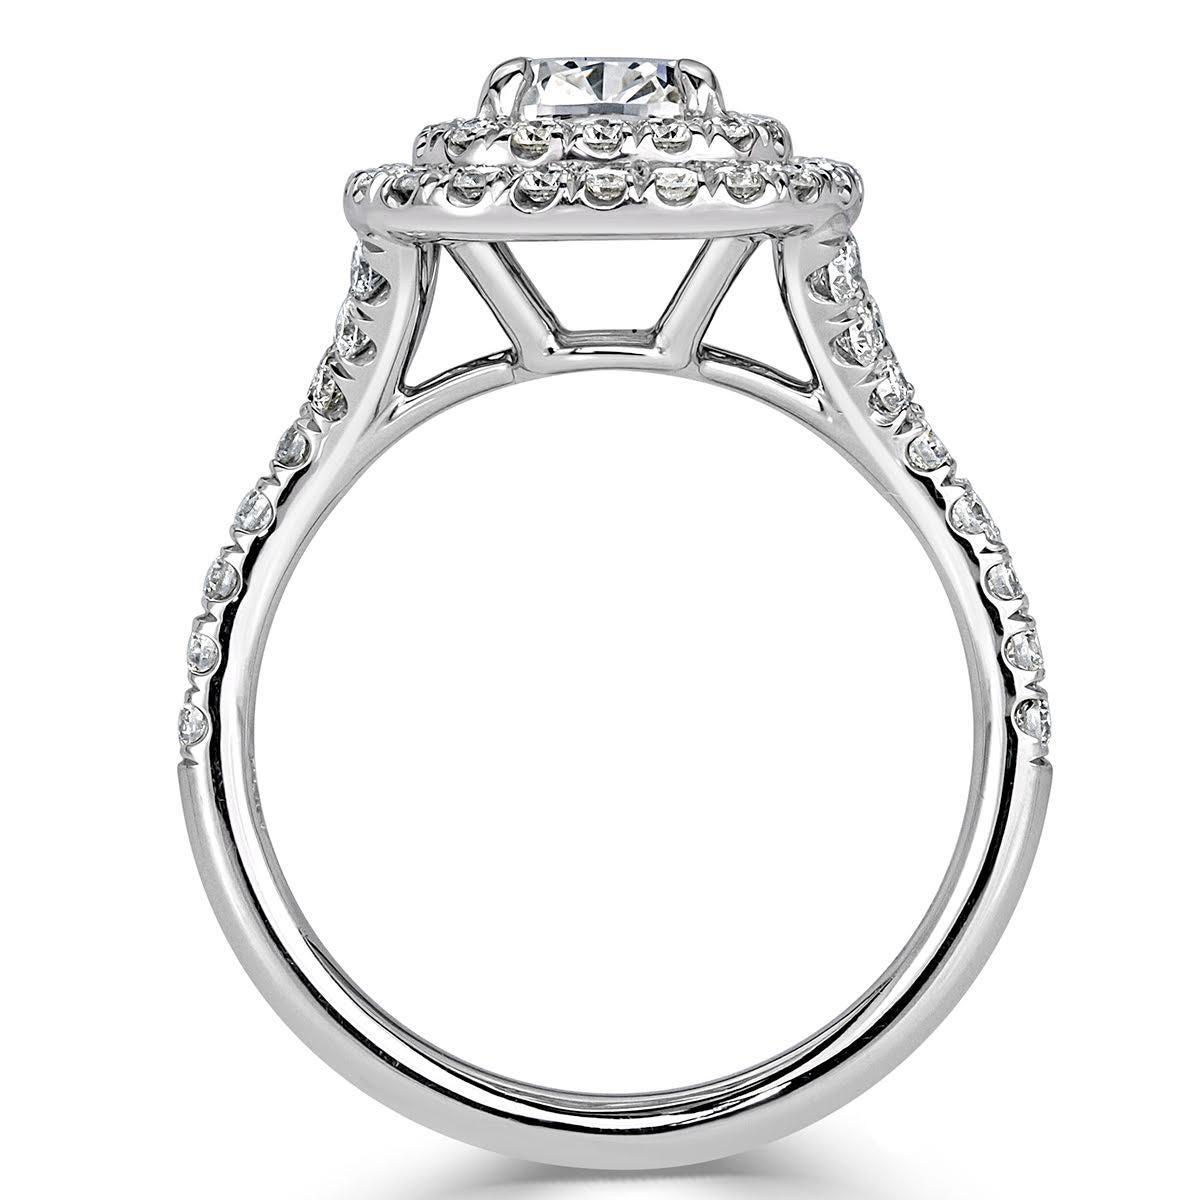 Women's or Men's Mark Broumand 2.31 Carat Cushion Cut Diamond Engagement Ring